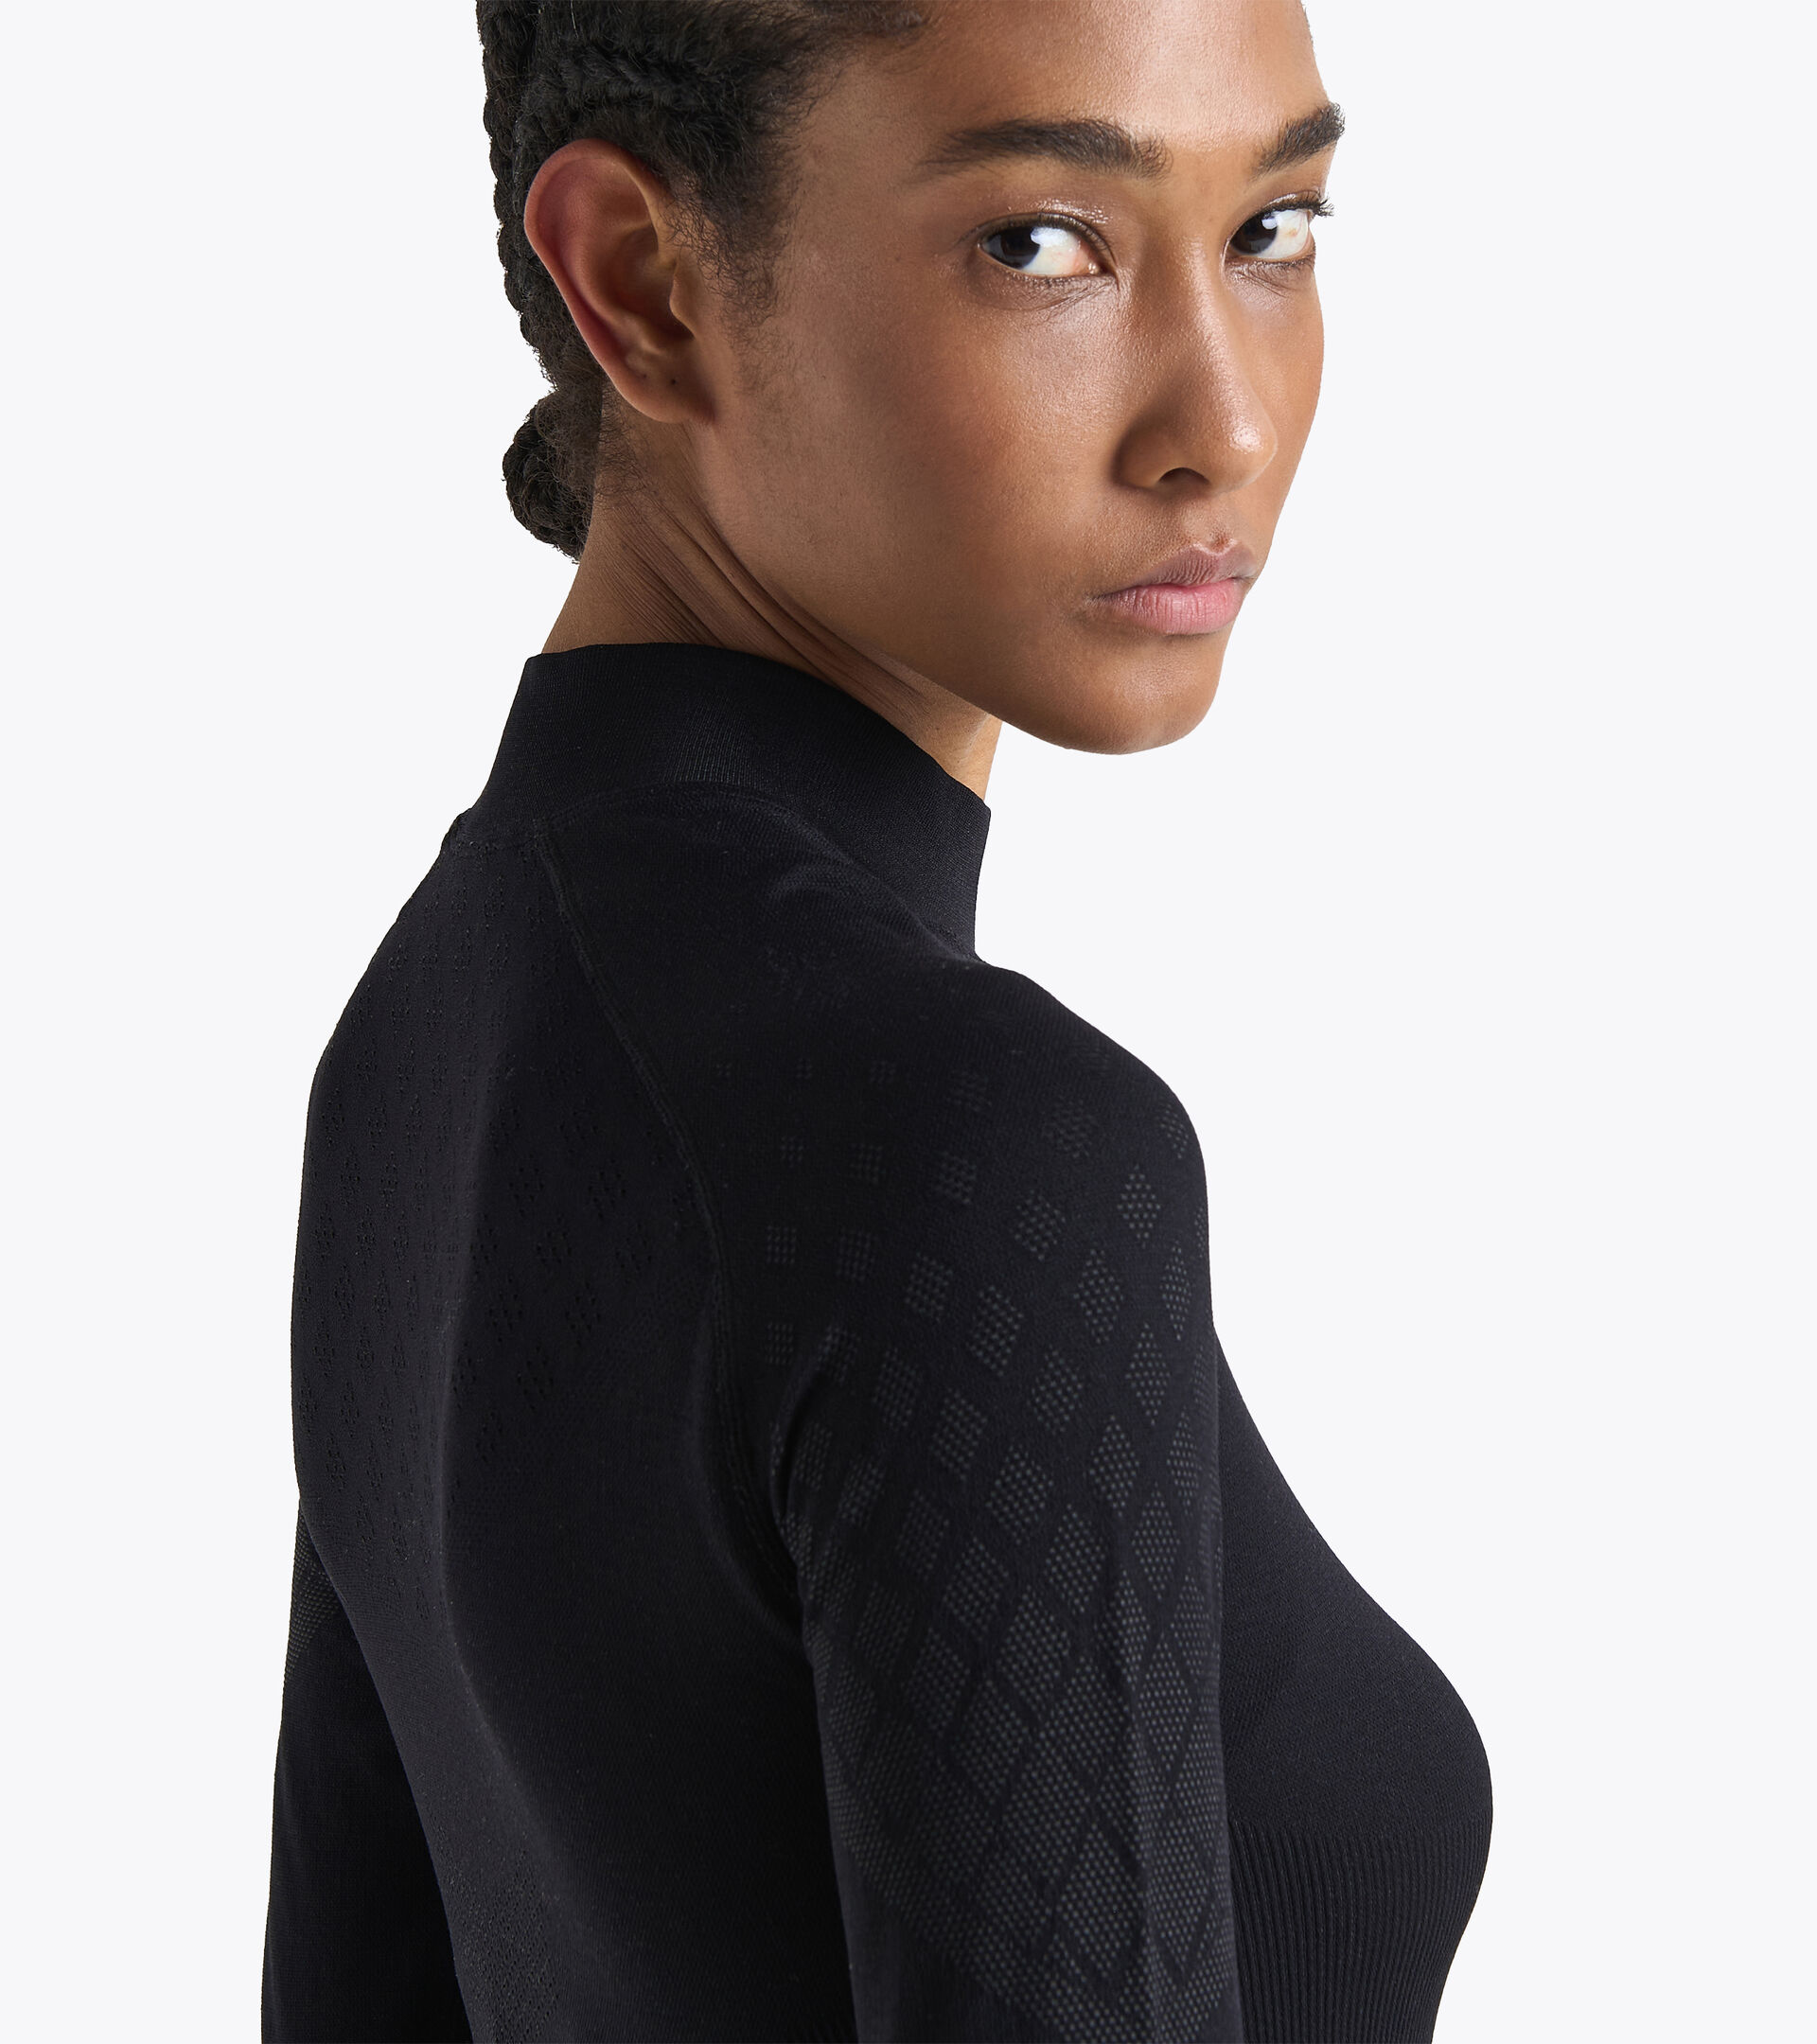 Long-sleeved training t-shirt - Women L. TURTLE NECK ACT BLACK - Diadora